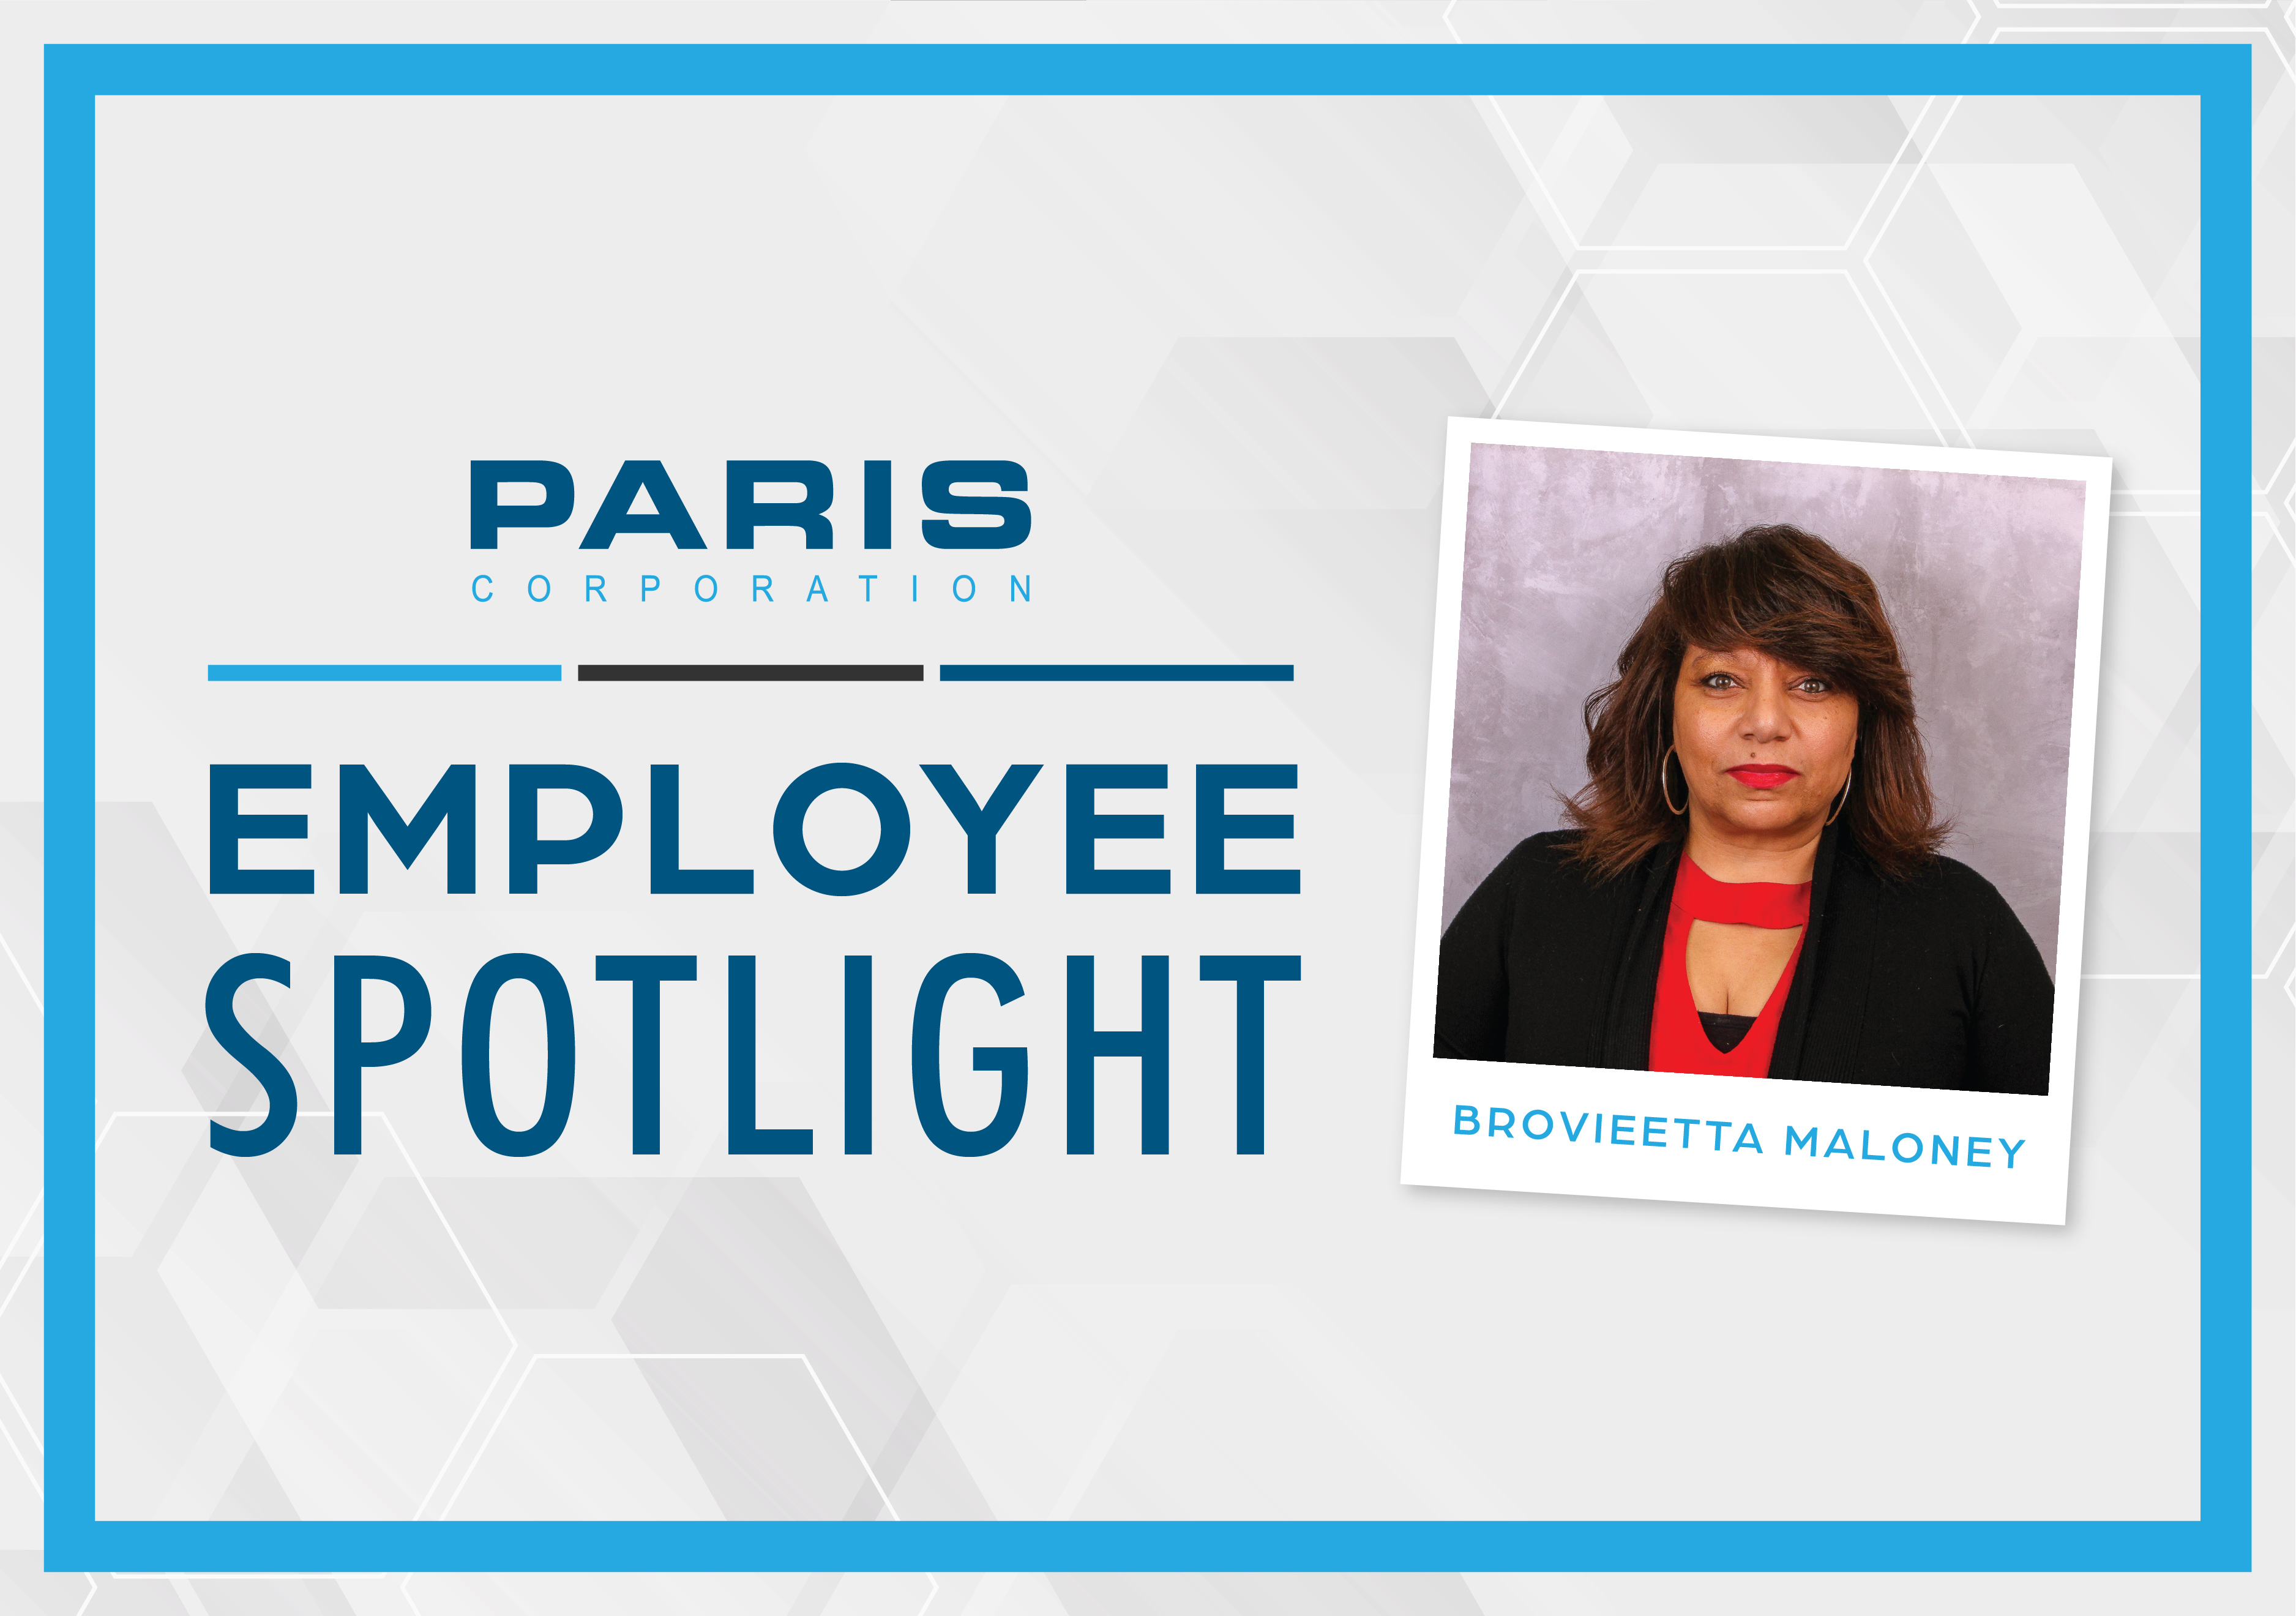 Brovieetta Maloney, employee spotlight,paris corporation, employee, spotlight, coworkers, friends, 20 questions, interview, employee spotlight, employee engagement